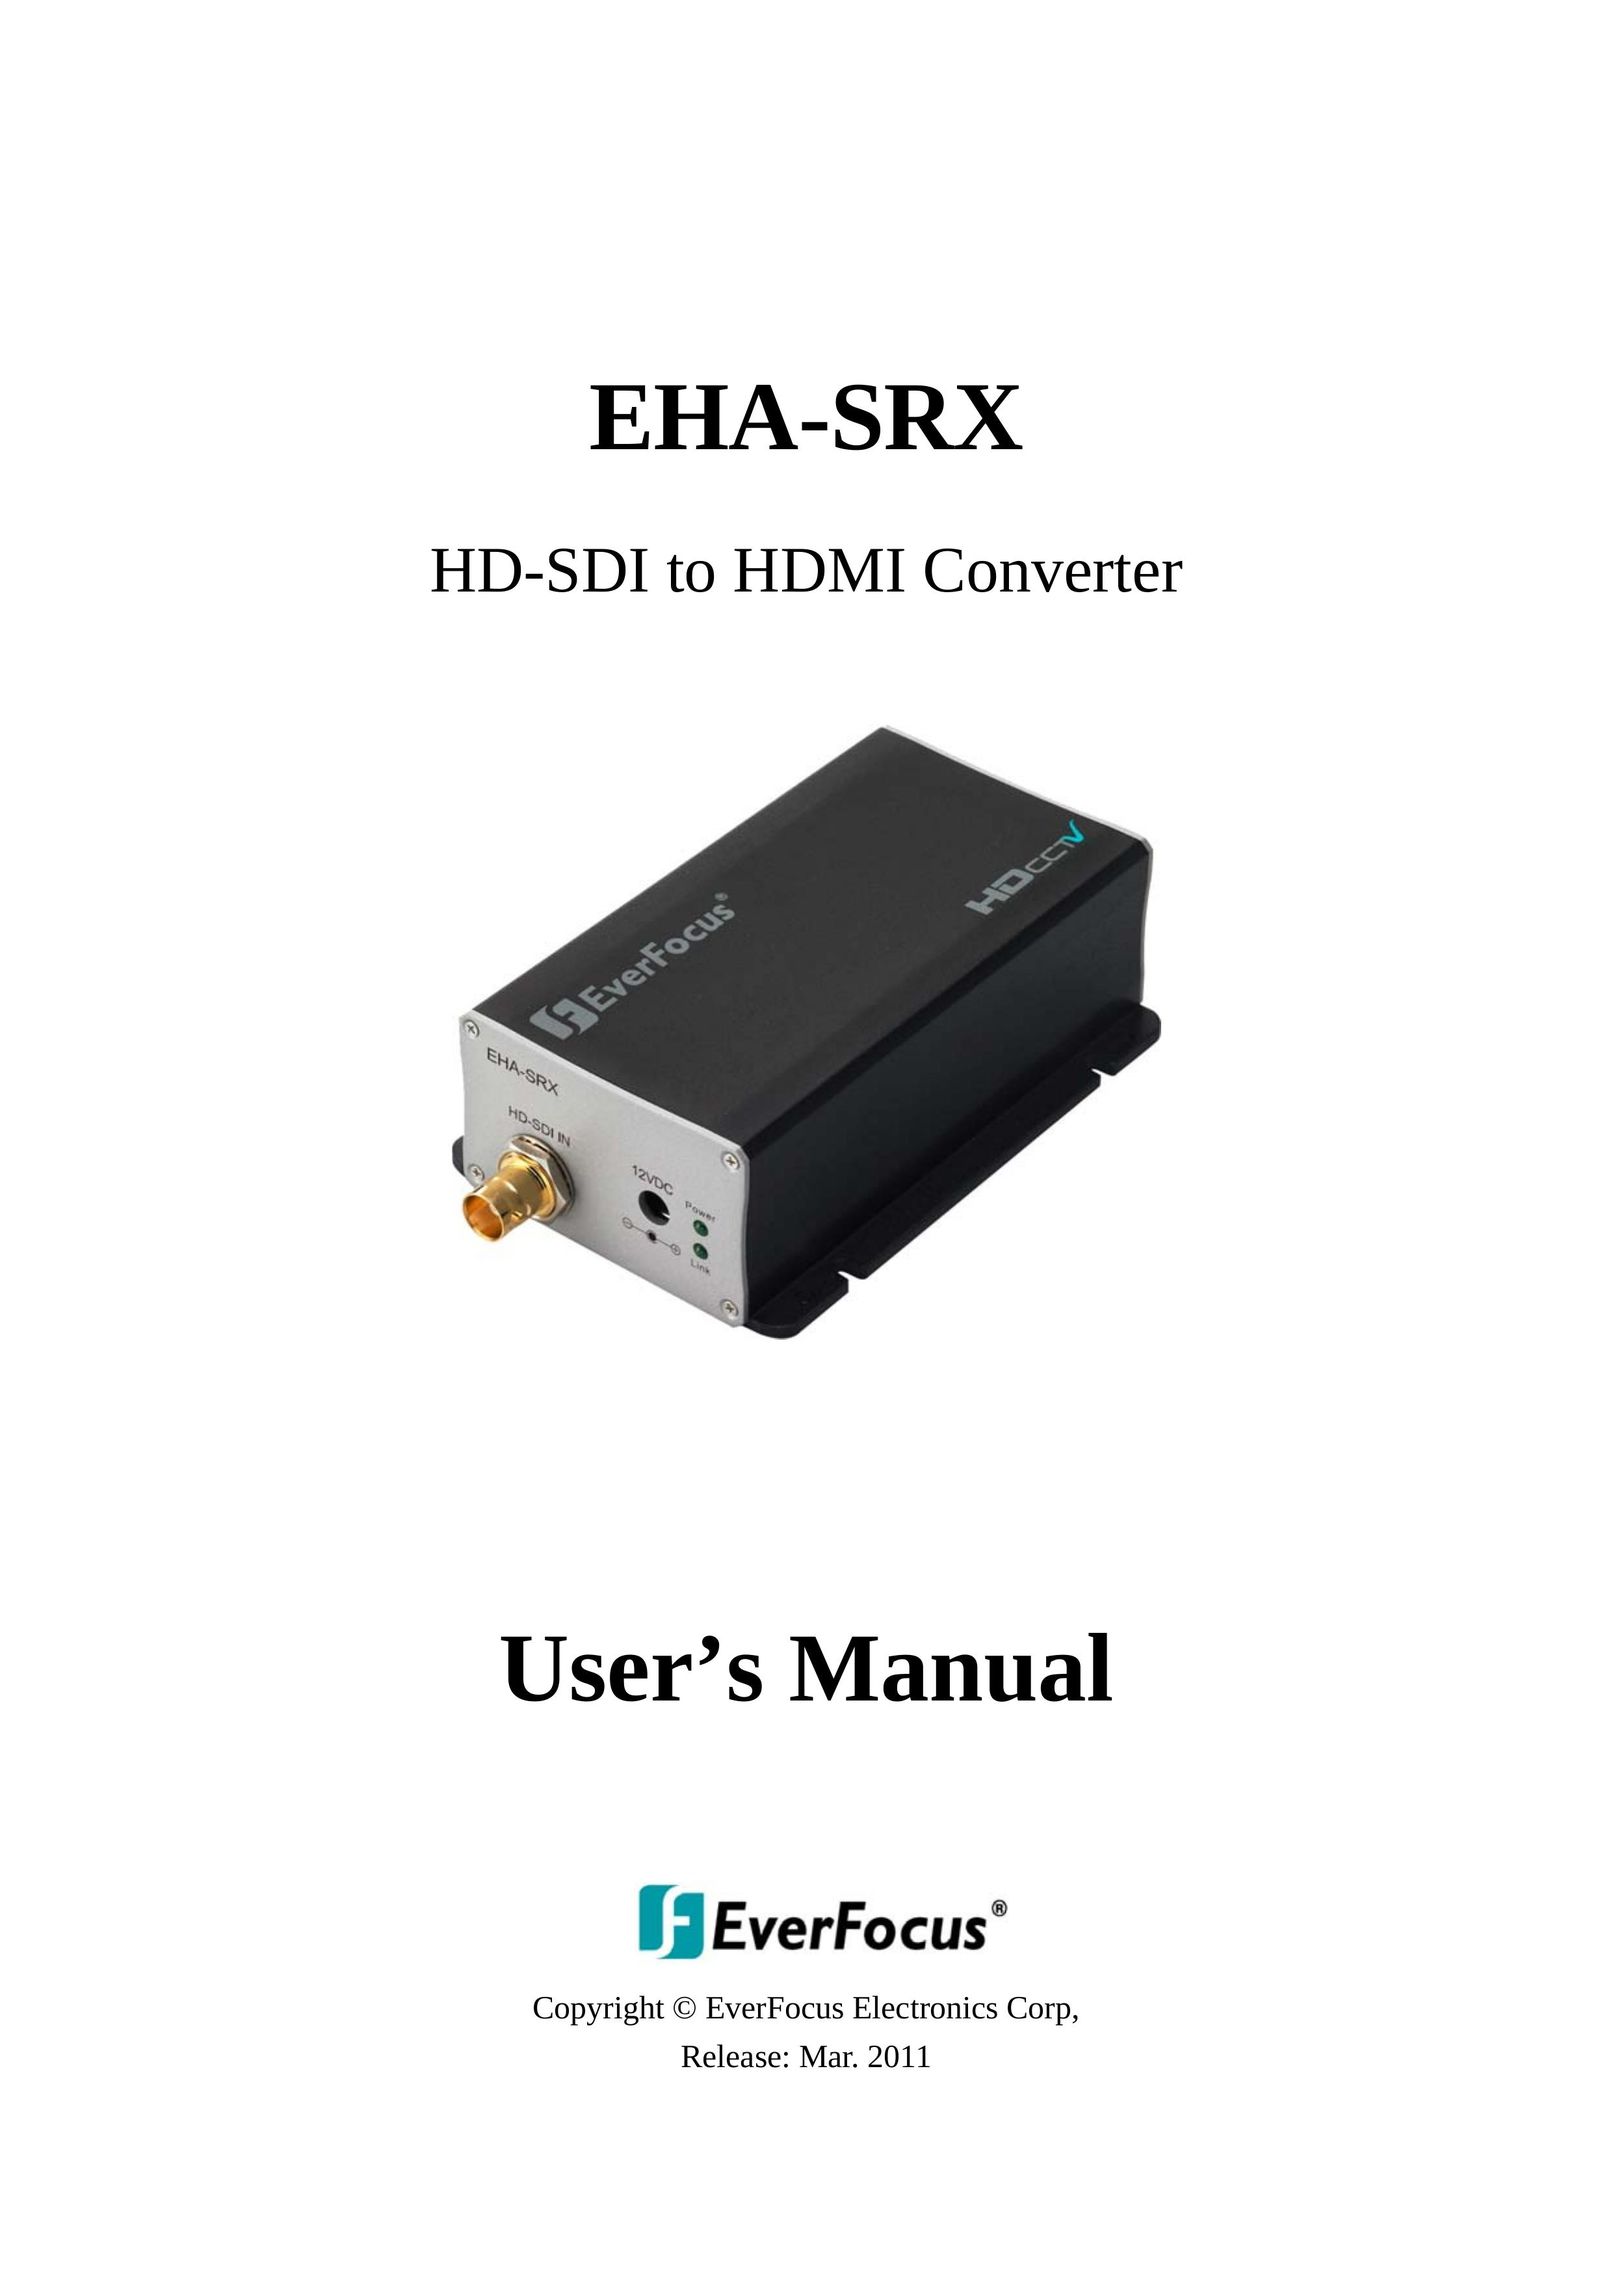 EverFocus EHA-SRX Cable Box User Manual